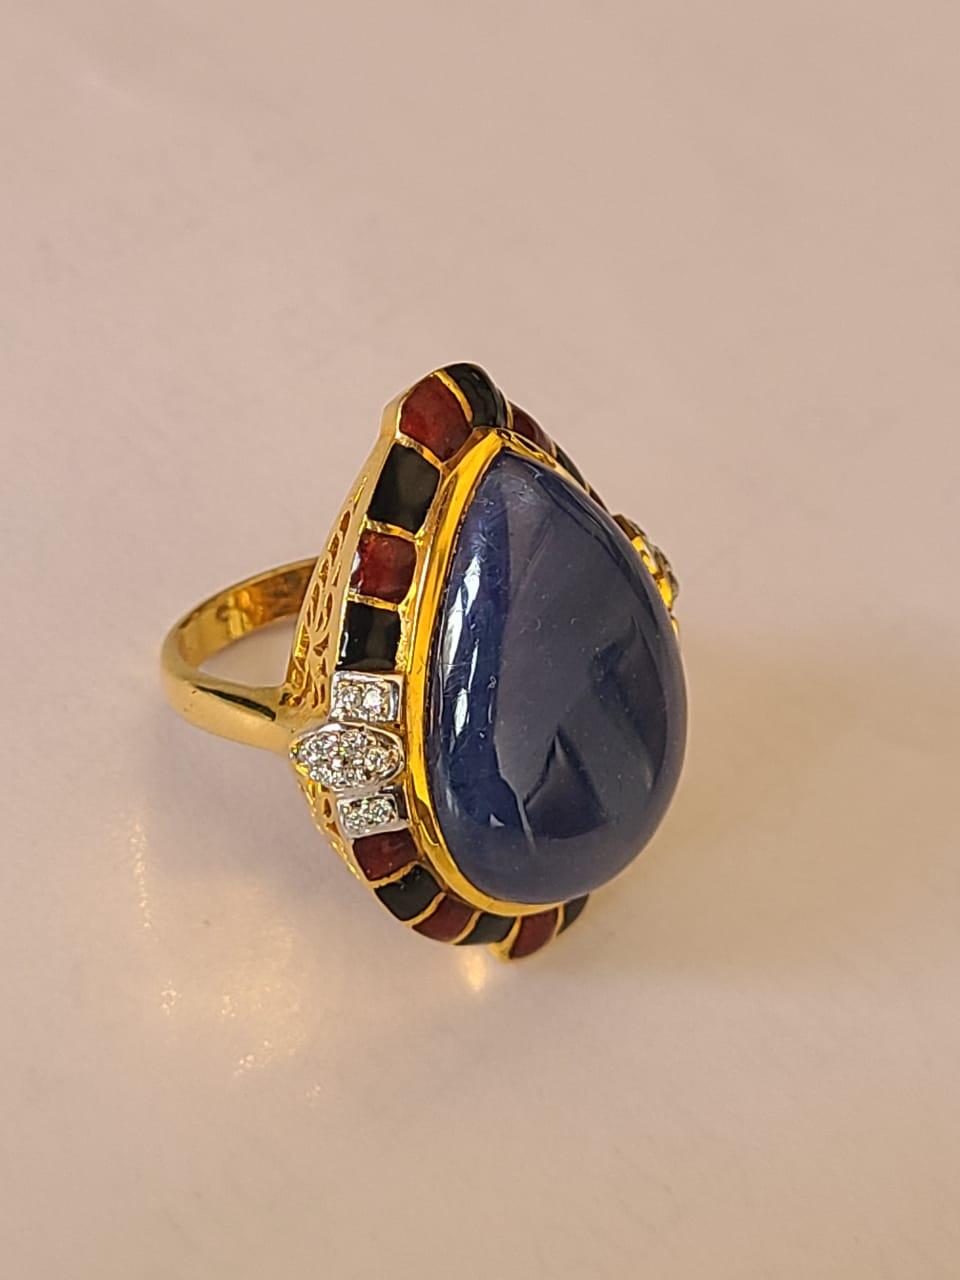 Cabochon 35.76 Carat Natural Blue Sapphire, Diamond and Enamel Ring in 18 Karat Gold